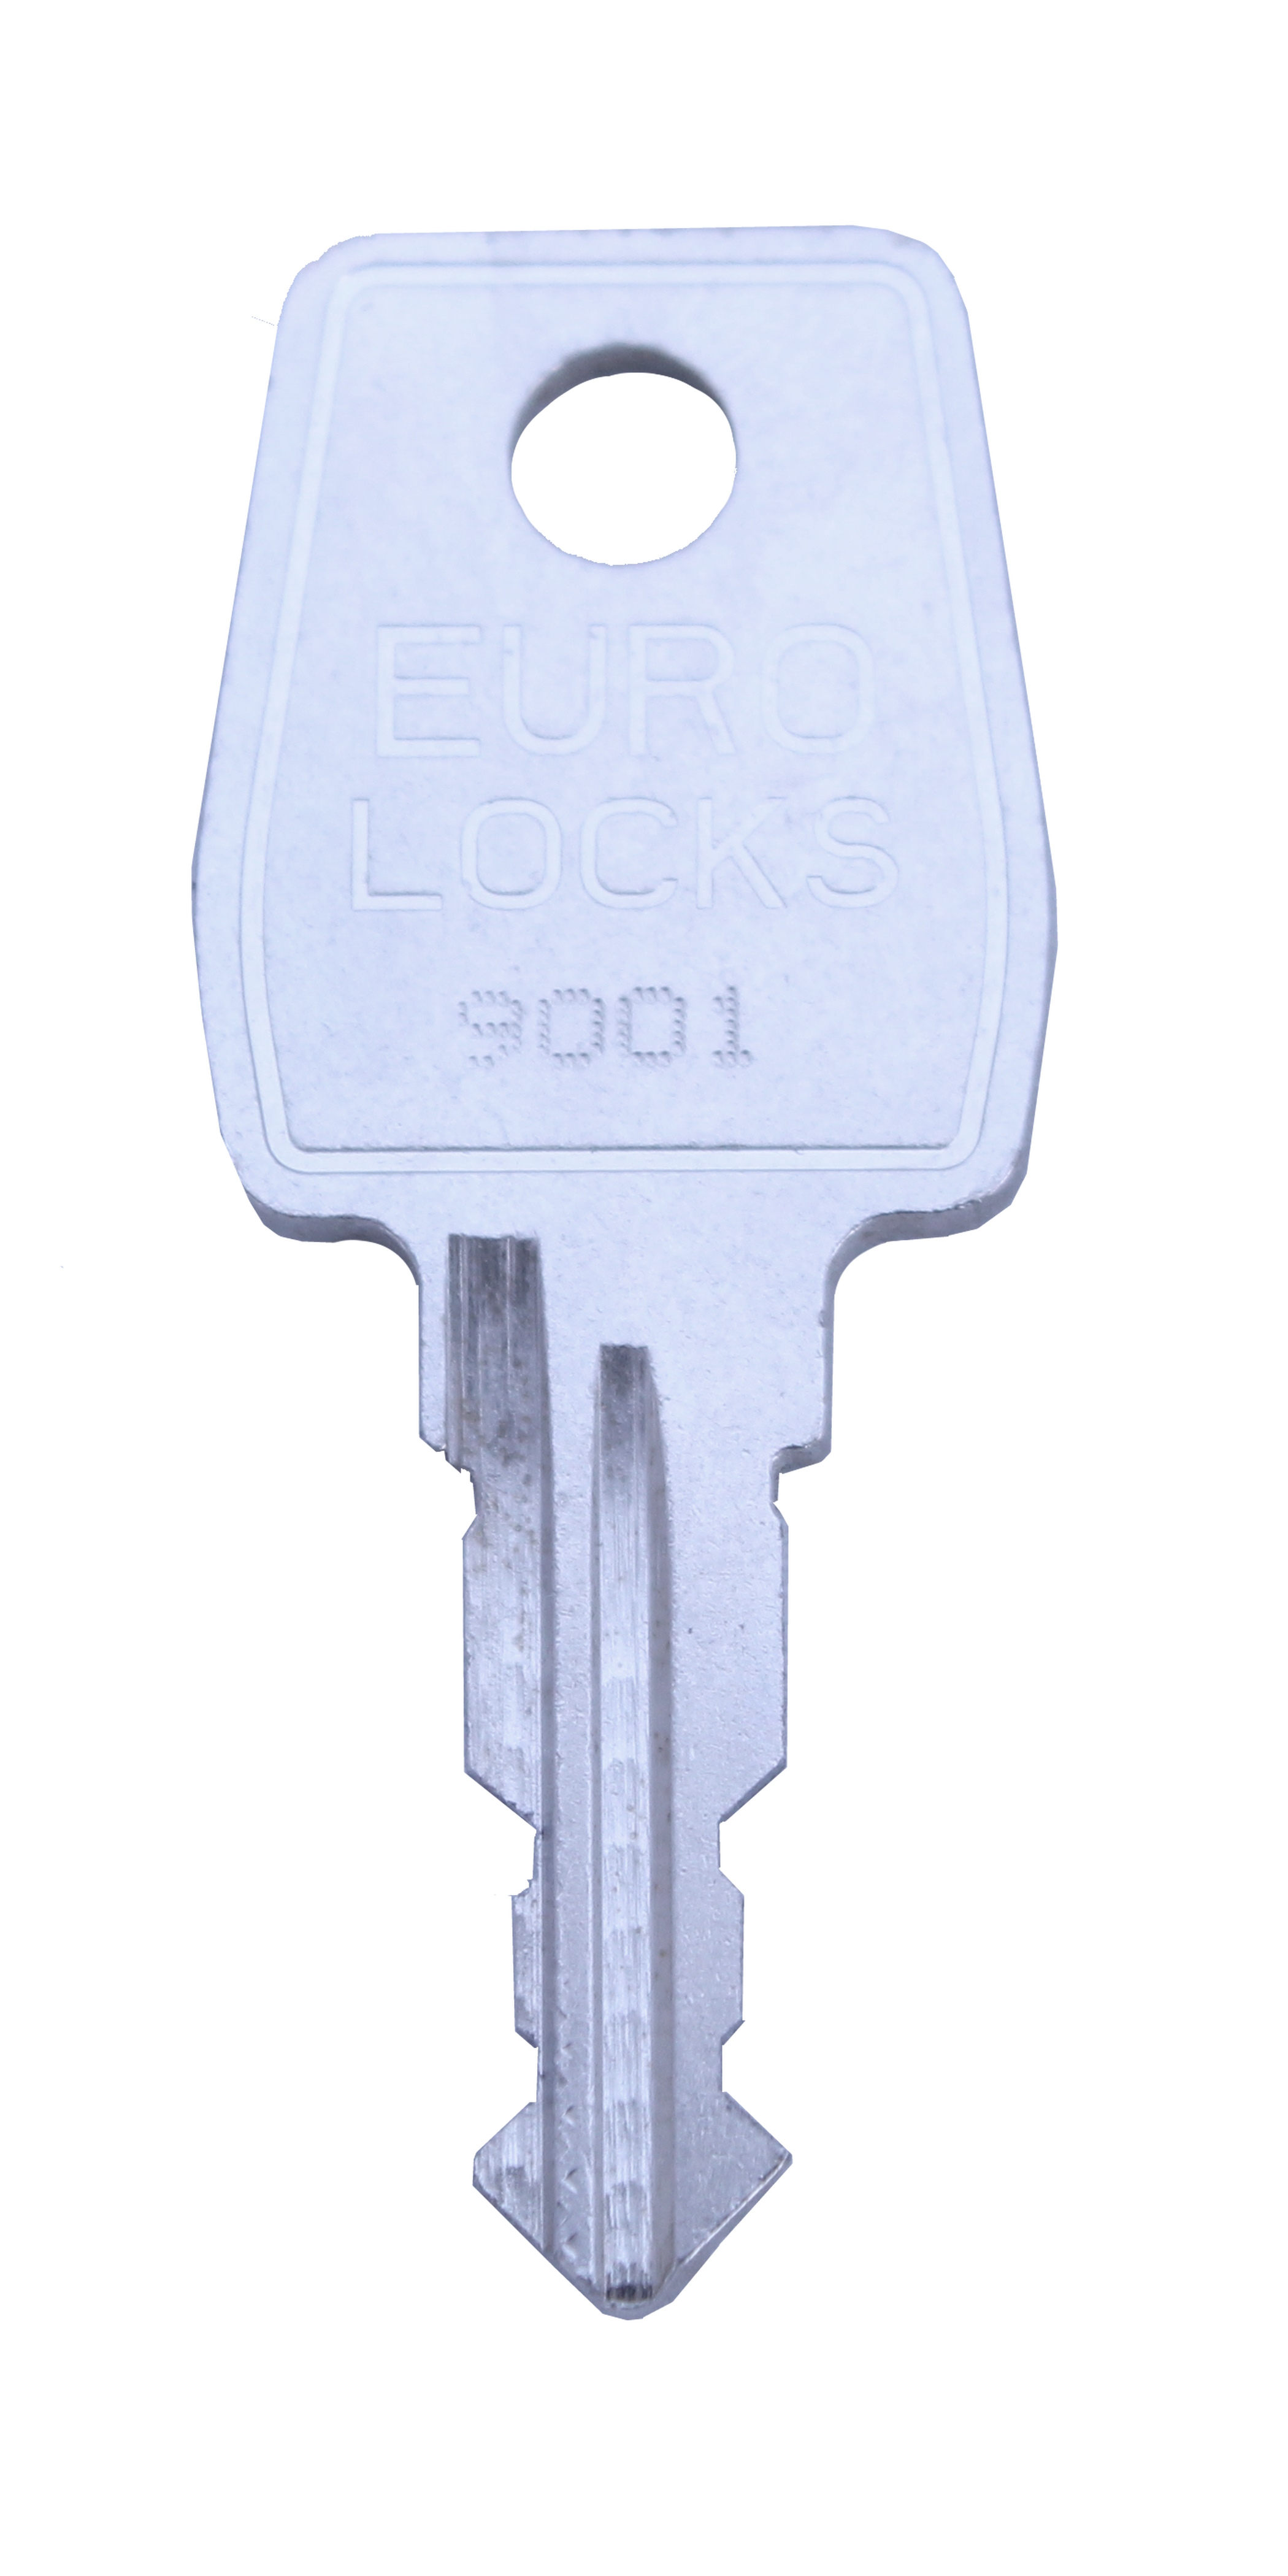 EUROLOCKS Key 9001